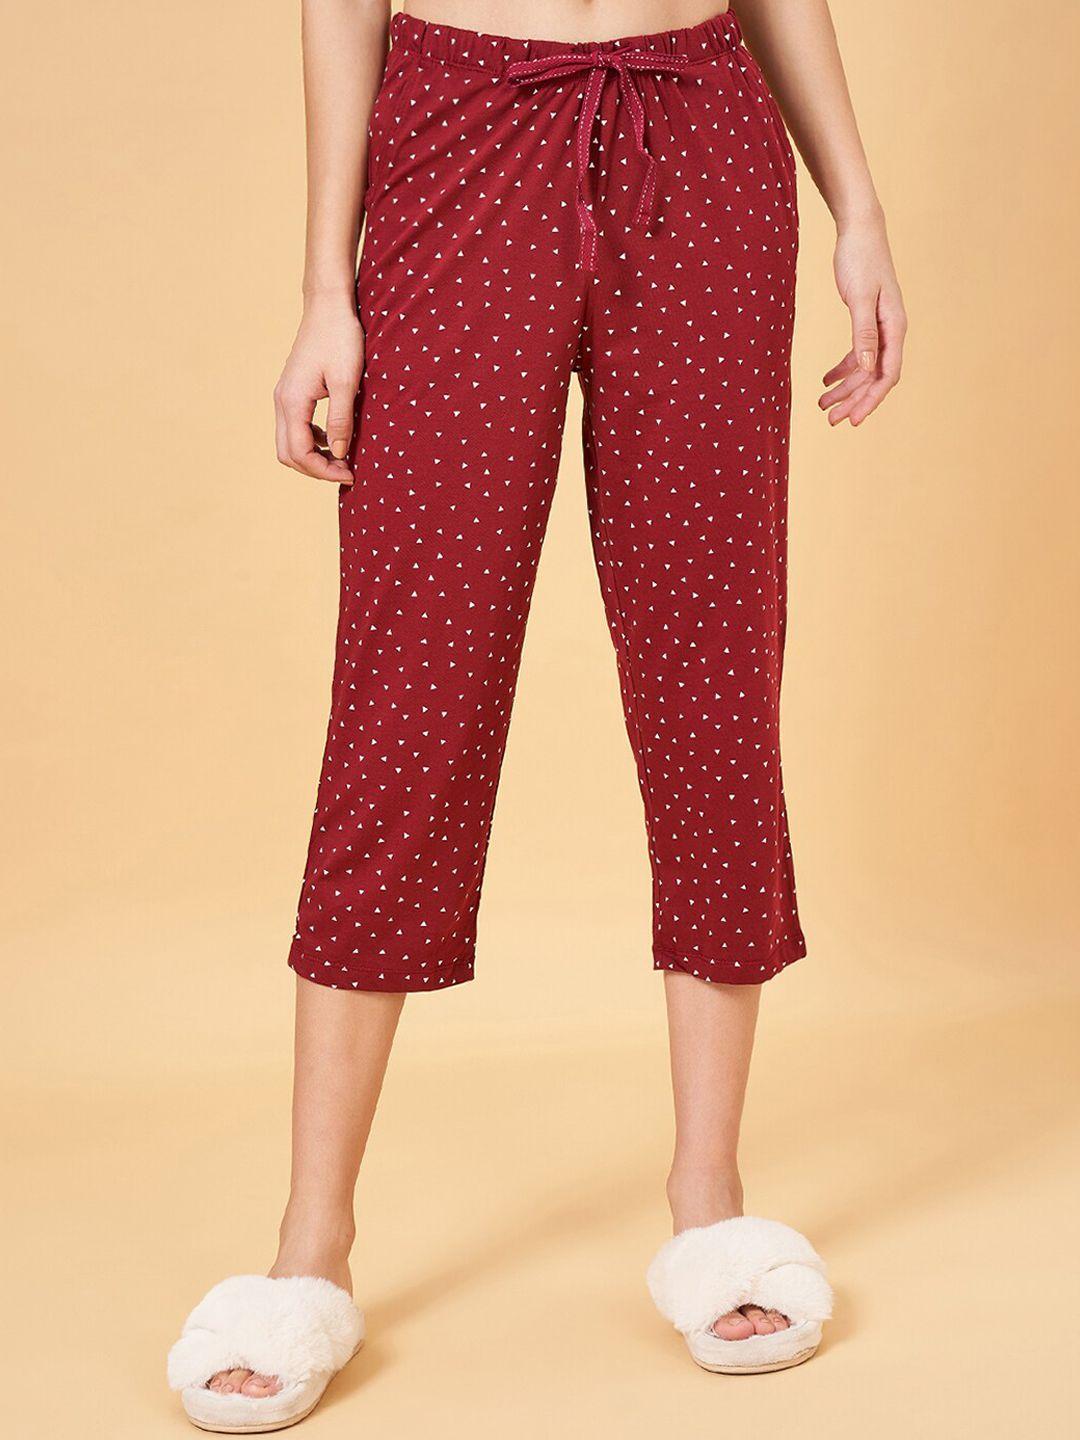 Dreamz by Pantaloons Women Conversational Printed Mid-Rise Pure Cotton Capri Lounge Pant